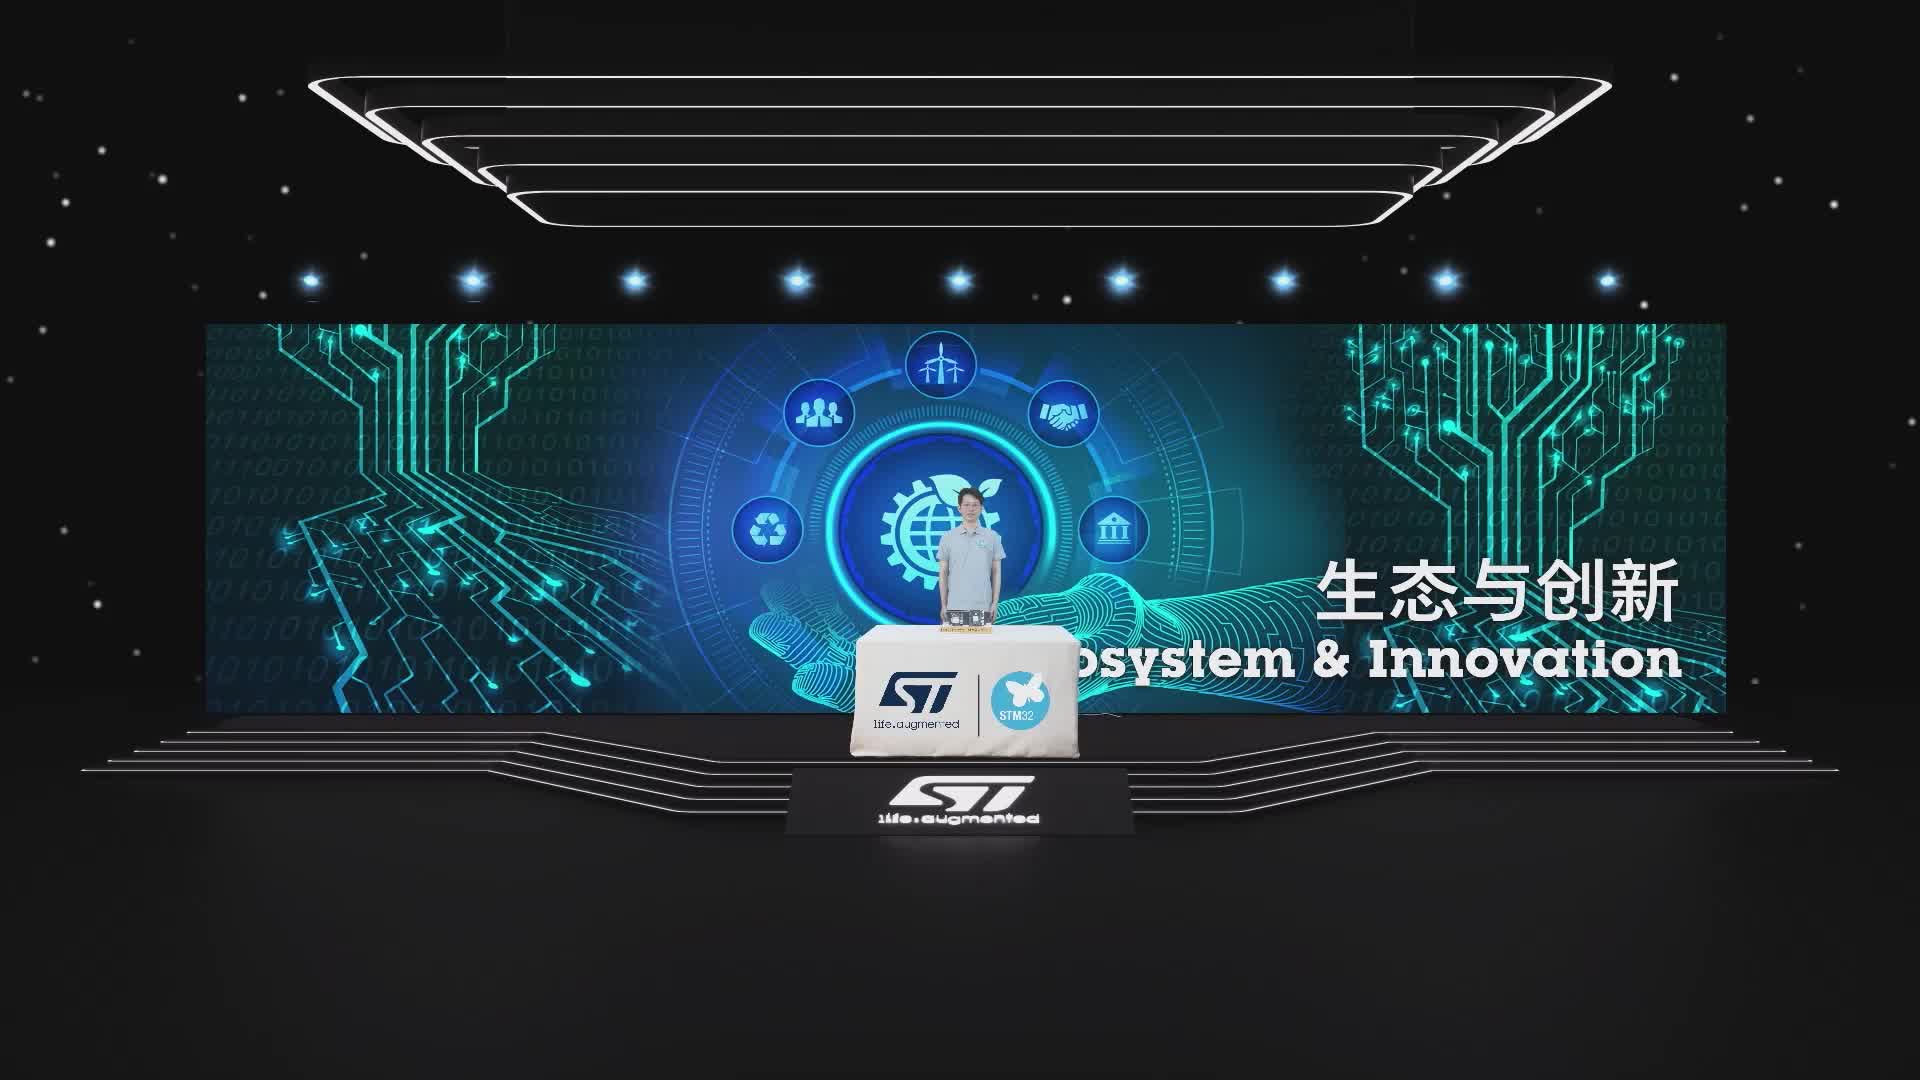 ST线上威廉希尔官方网站
周，展示基于STM32MP157、STM32MP151系列处理器开发的核心板及开发板